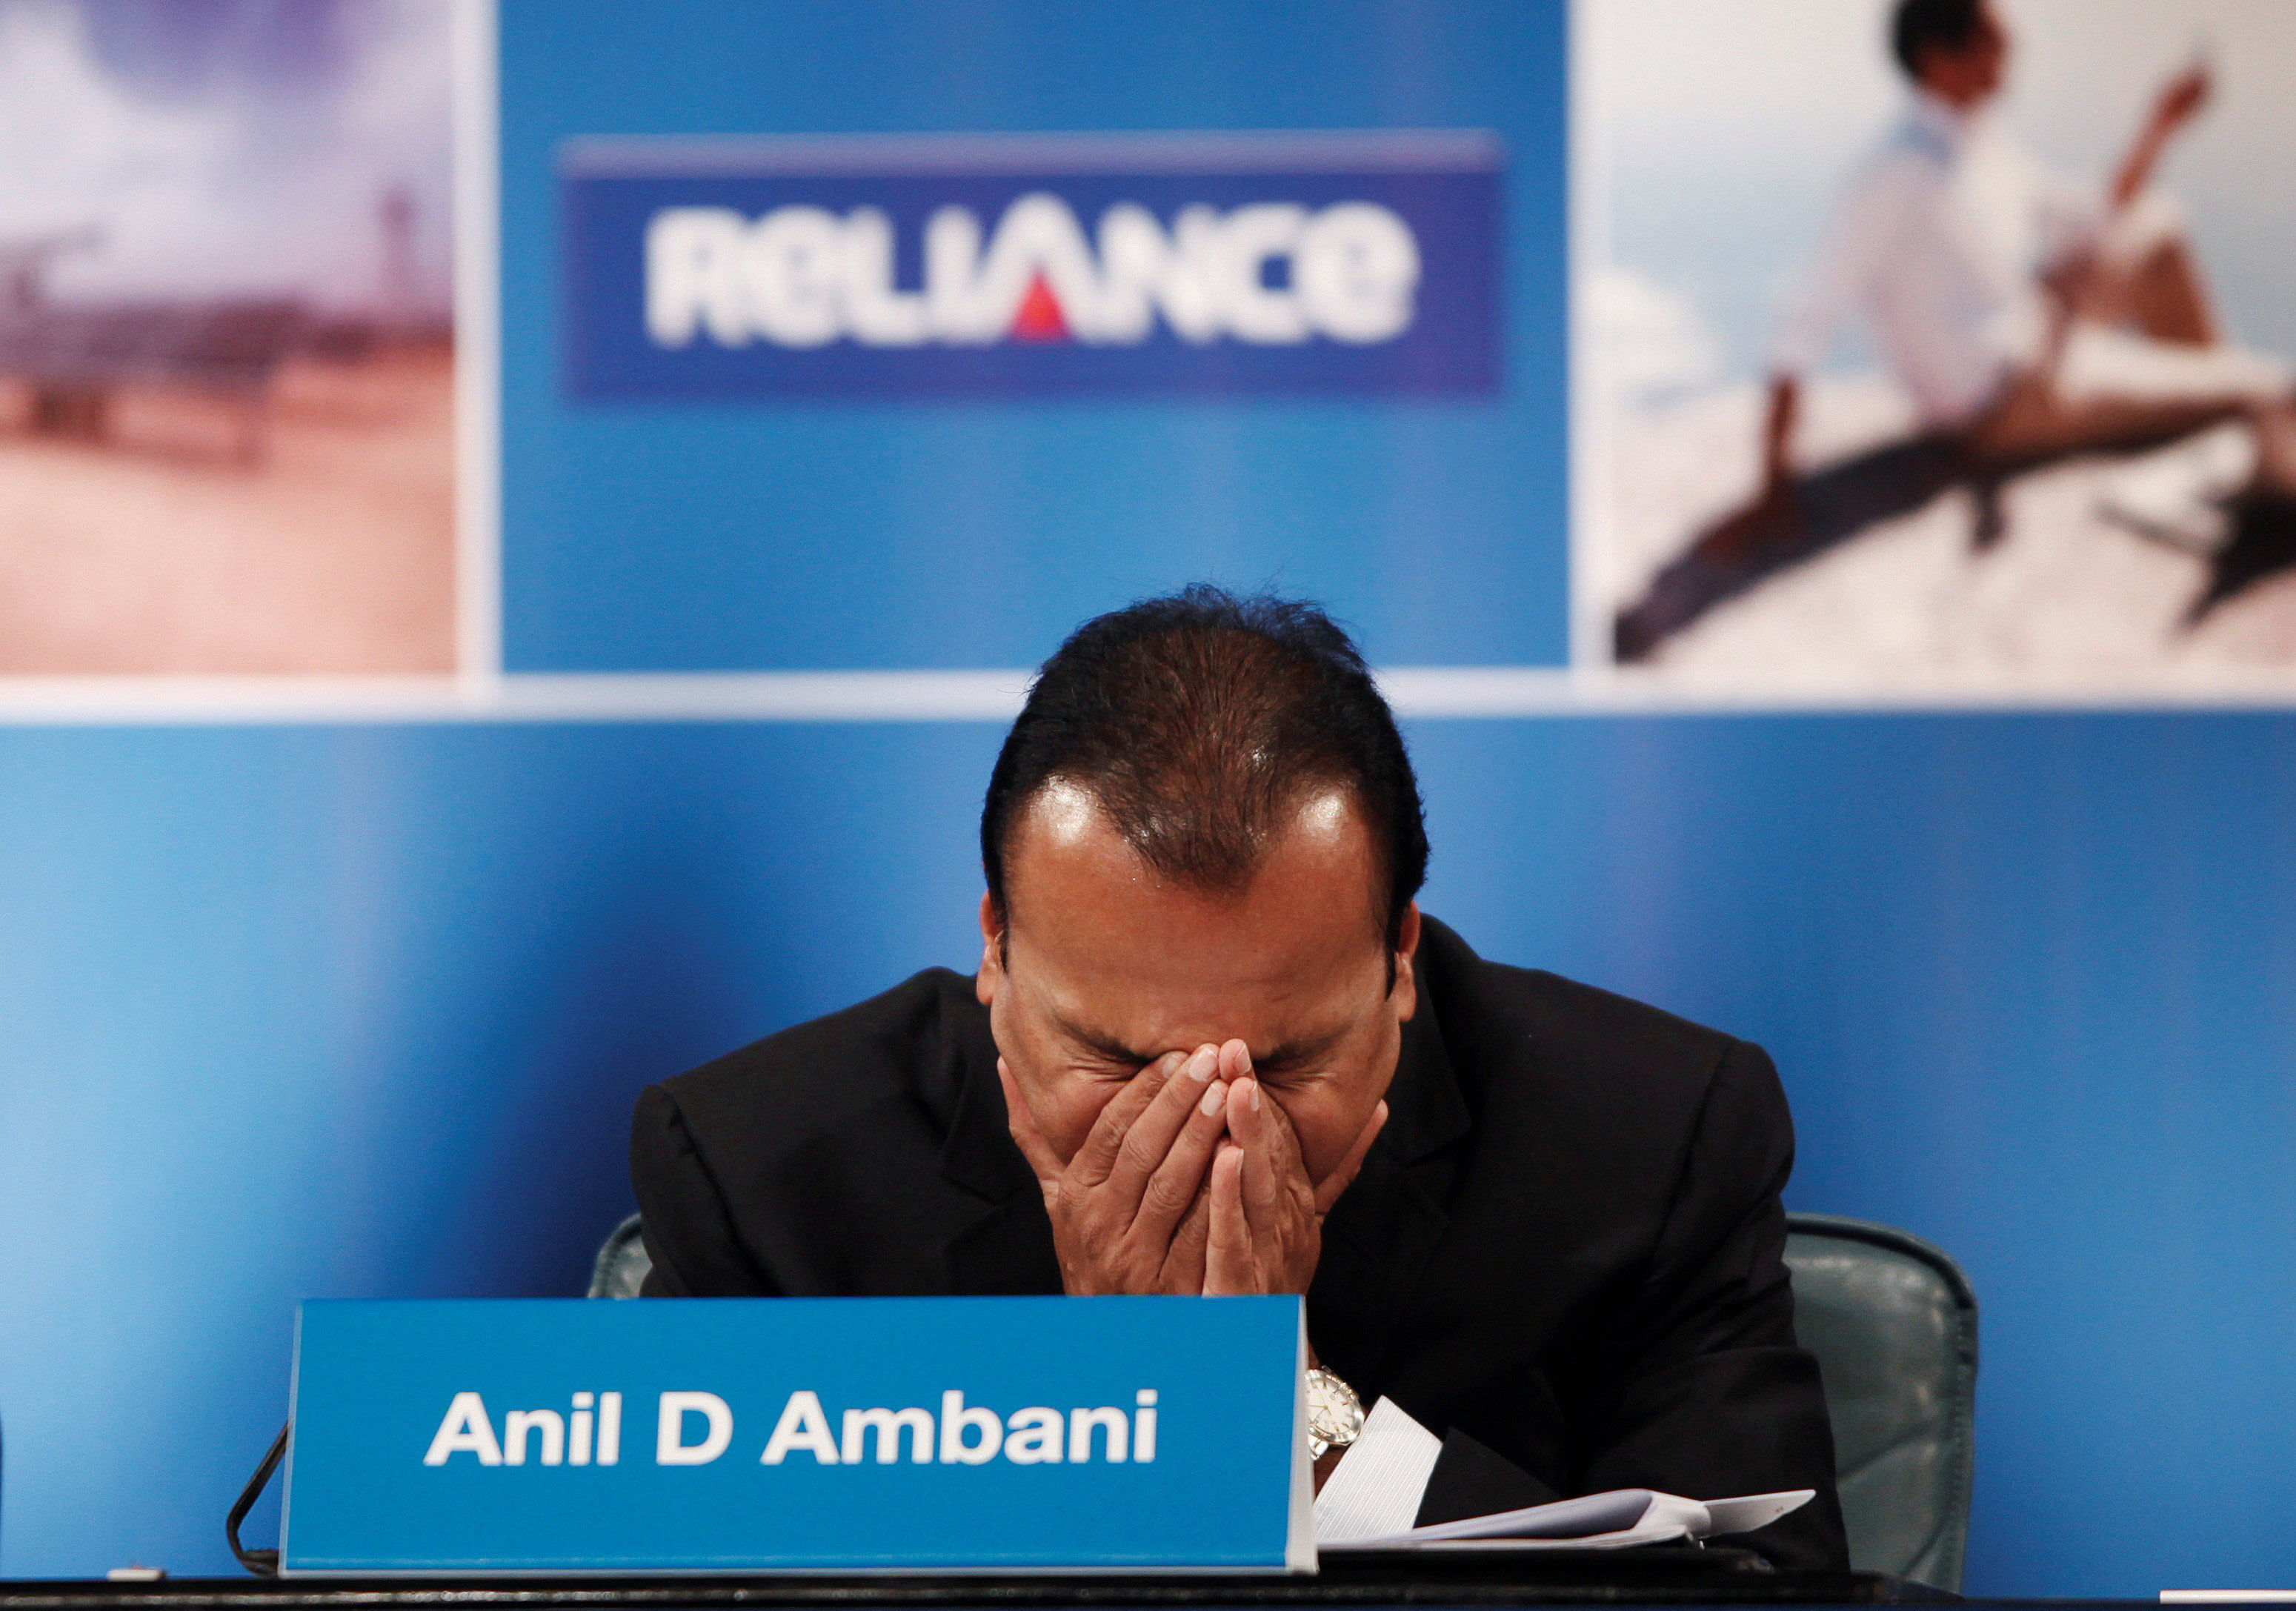 Anil Ambani, Chairman of the Reliance Anil Dhirubhai Ambani Group, attends the annual general meeting of Reliance Communication in Mumbai. (Reuters Photo)